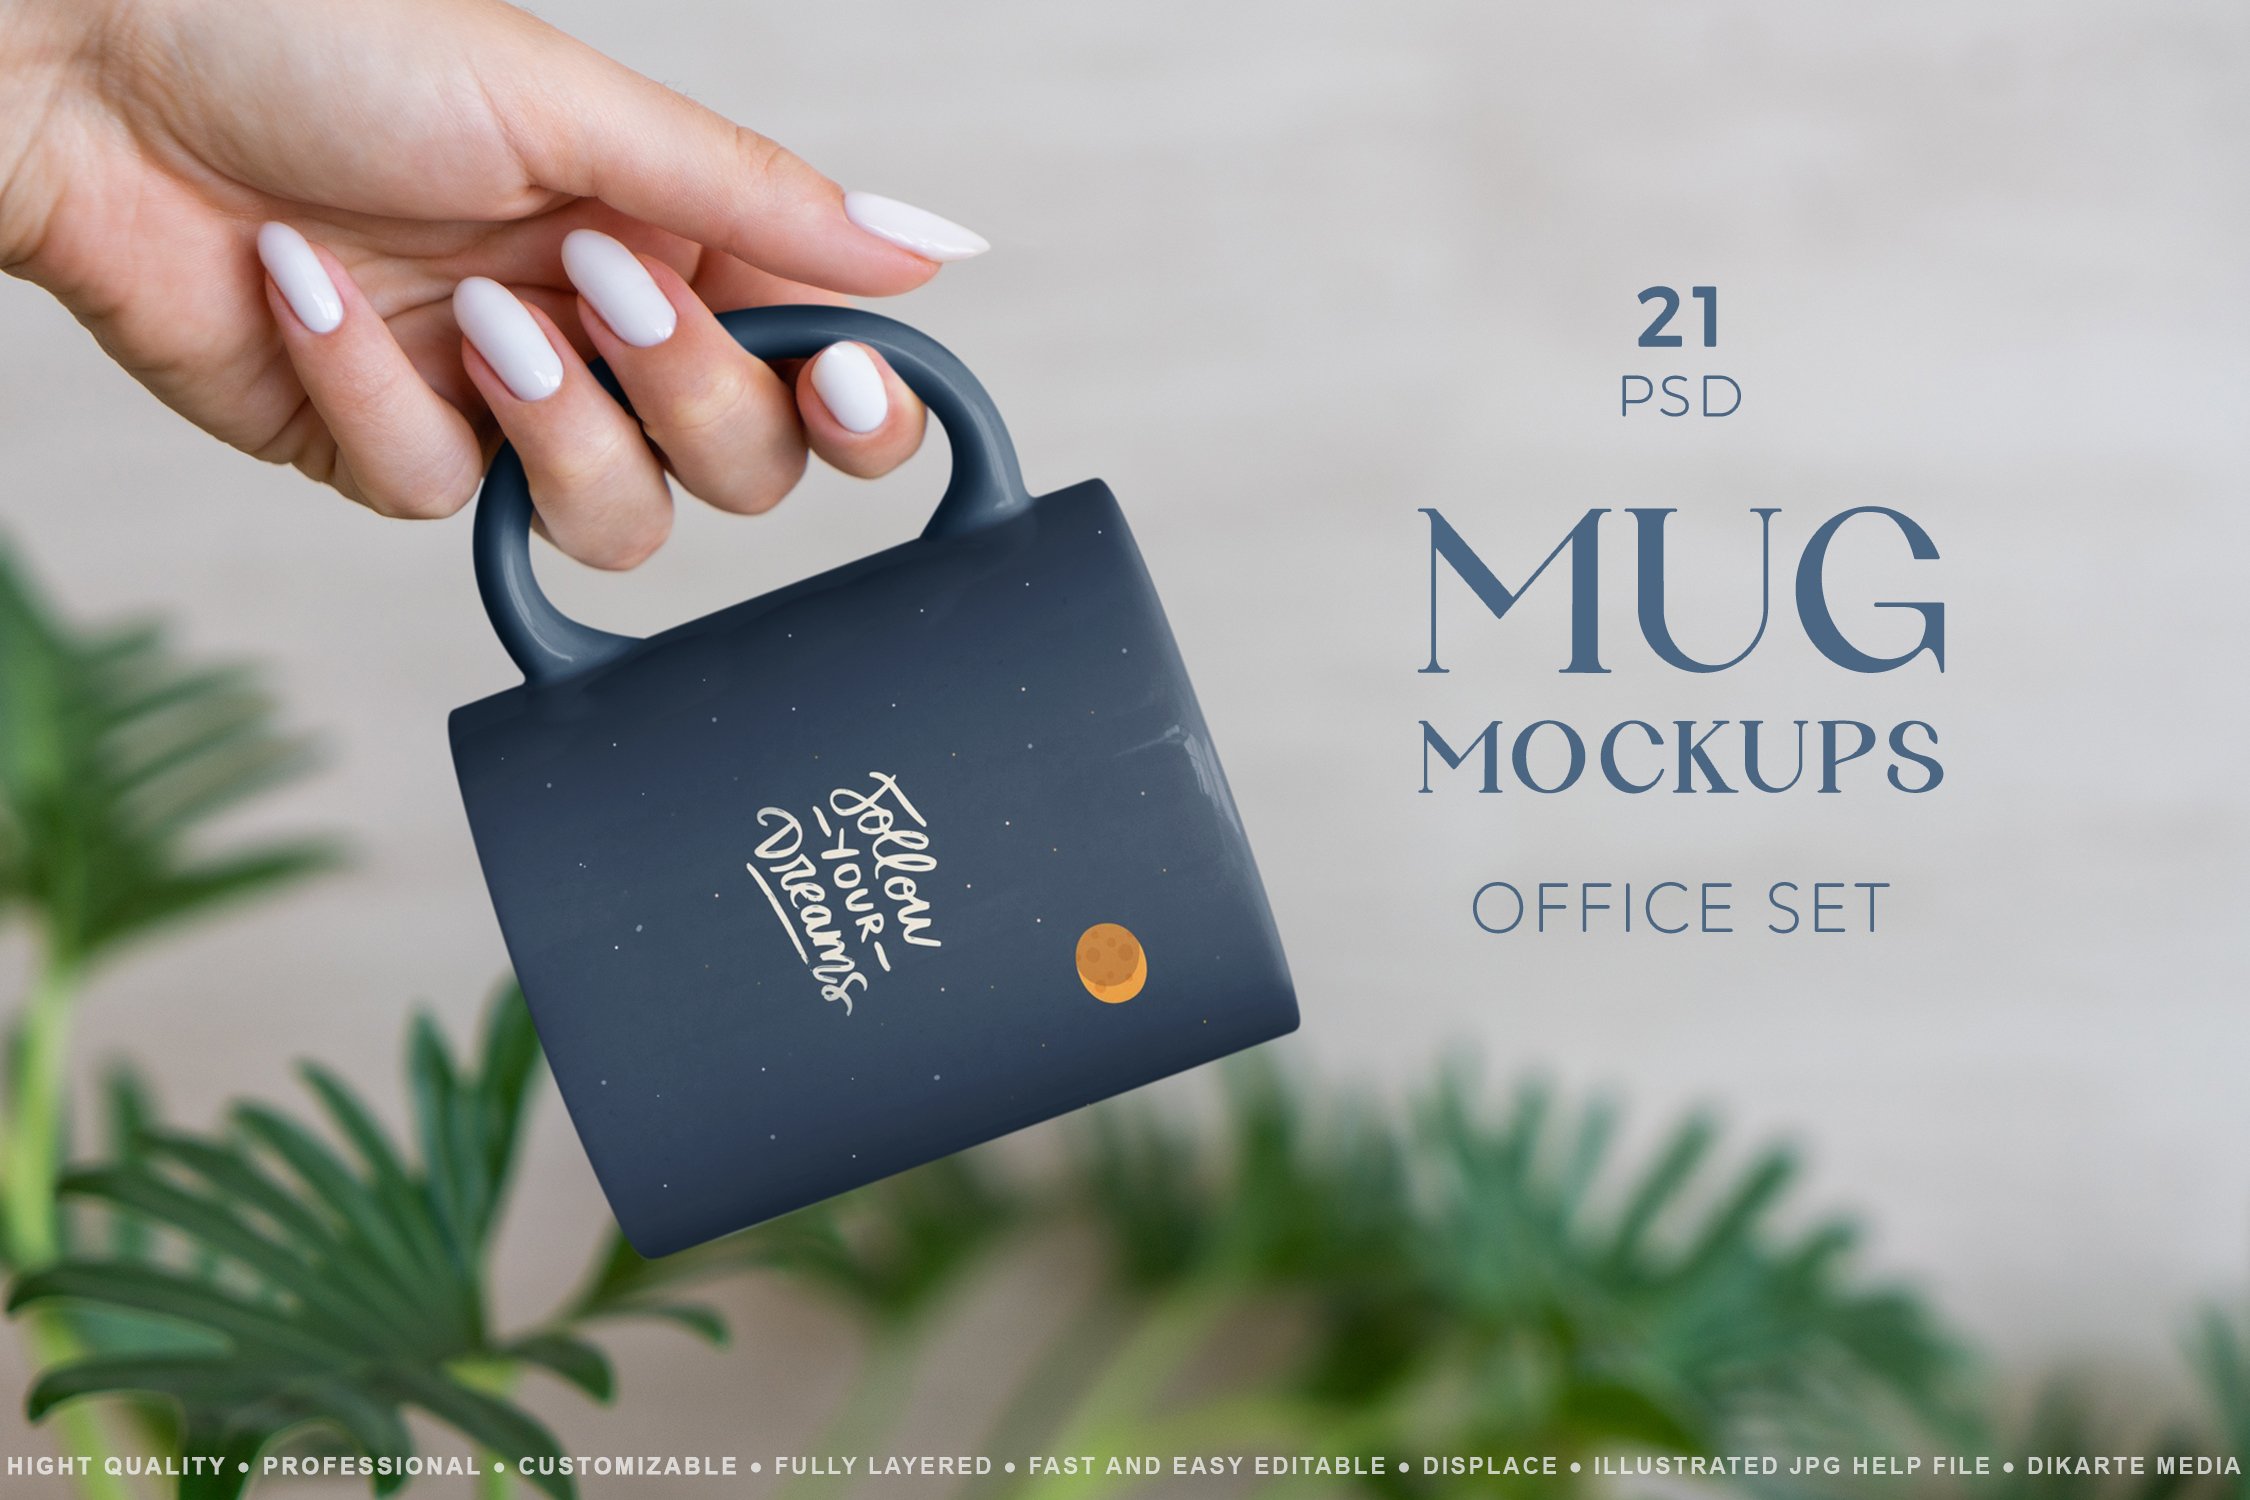 Mug MockUp Office Set cover image.